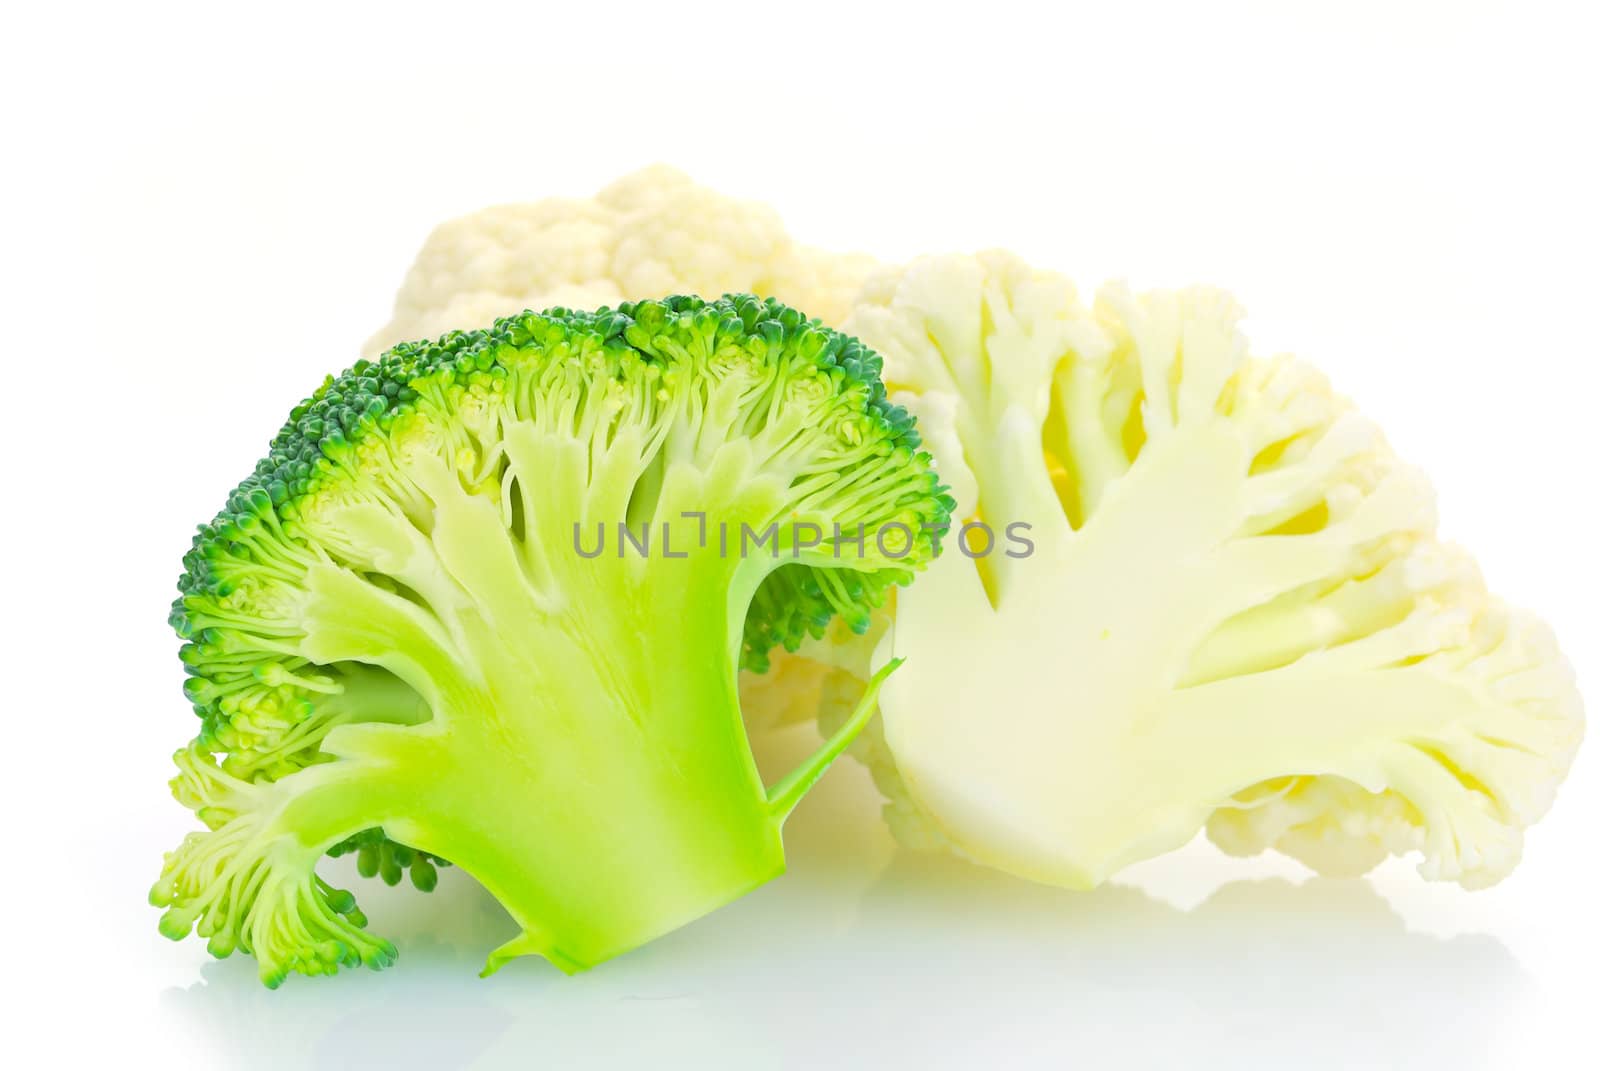 cauliflower and broccoli vegettable by teen00000